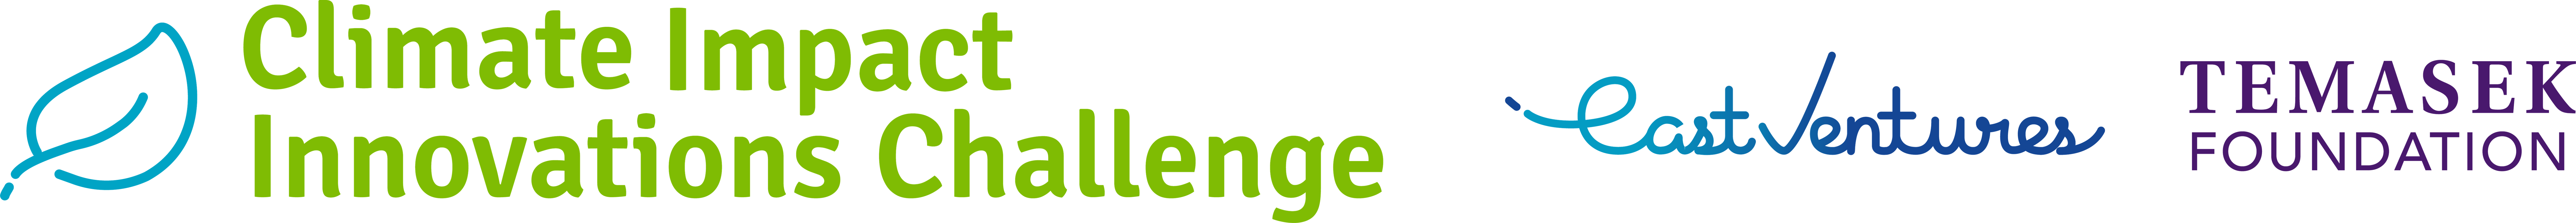 Climate Impact Innovations Challenge, East Ventures & Temasek Foundation